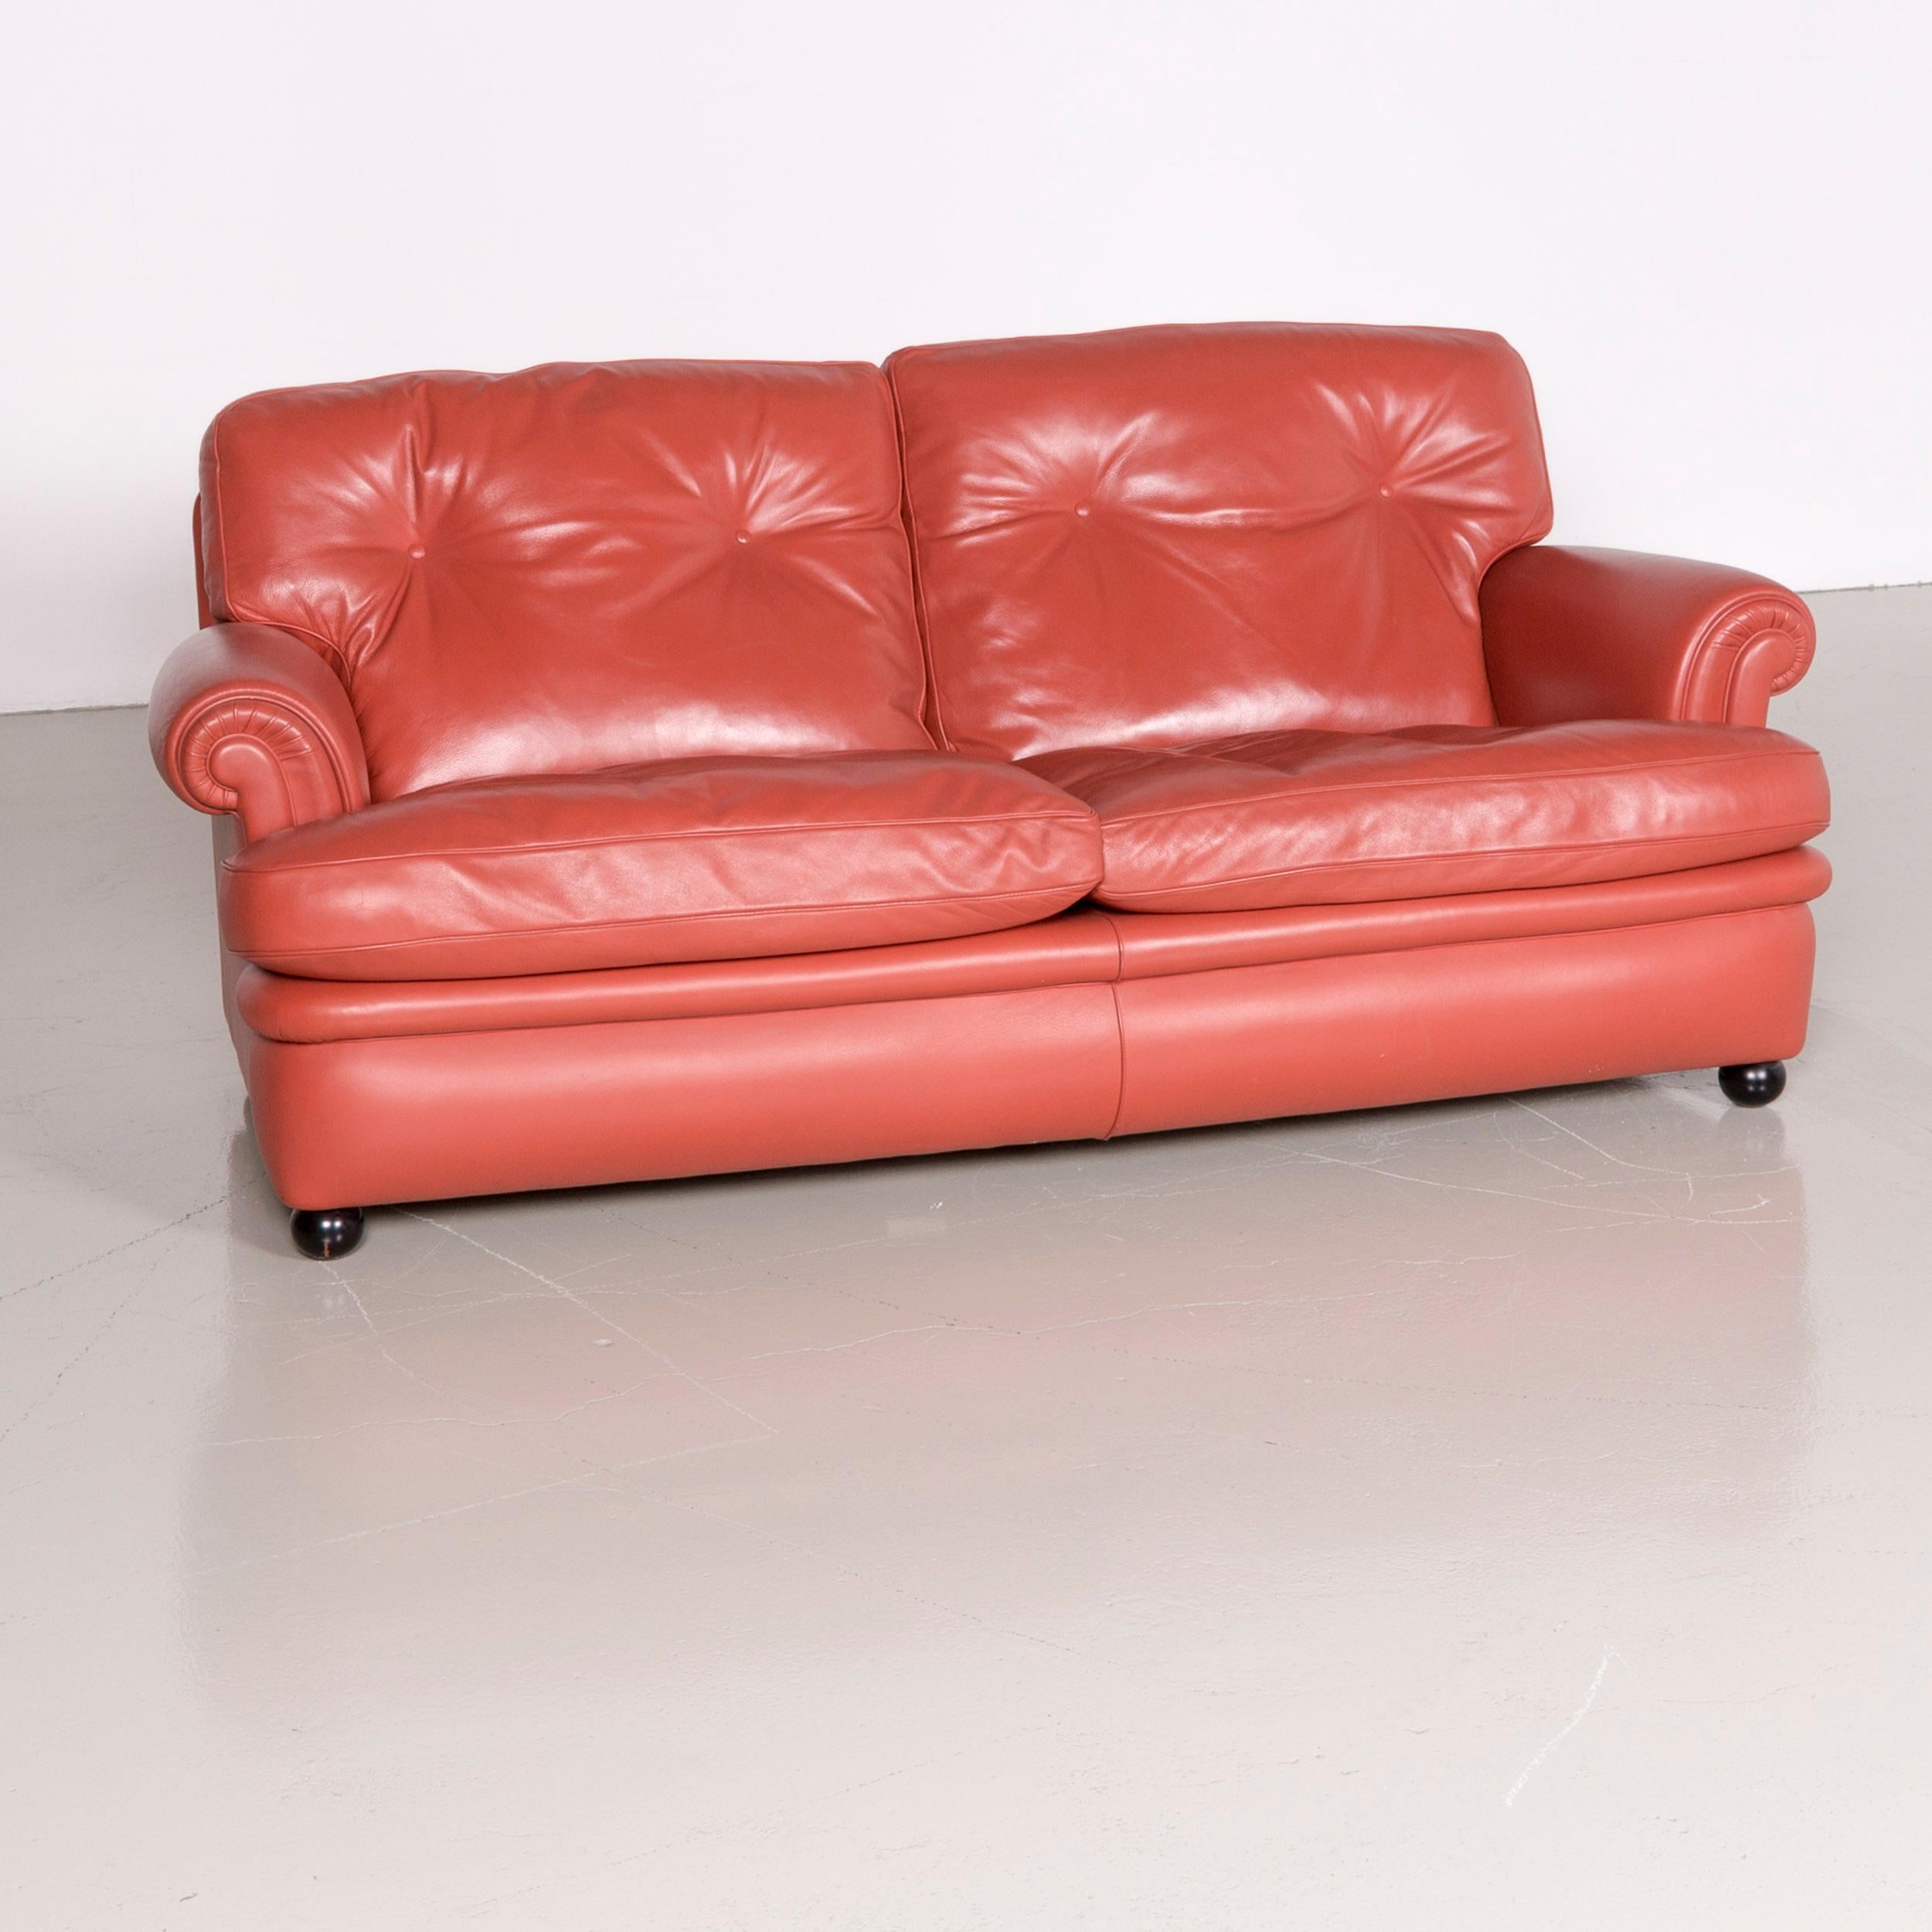 Italian Poltrona Frau Dream on Designer Leather Two-Seat Couch Orange For Sale